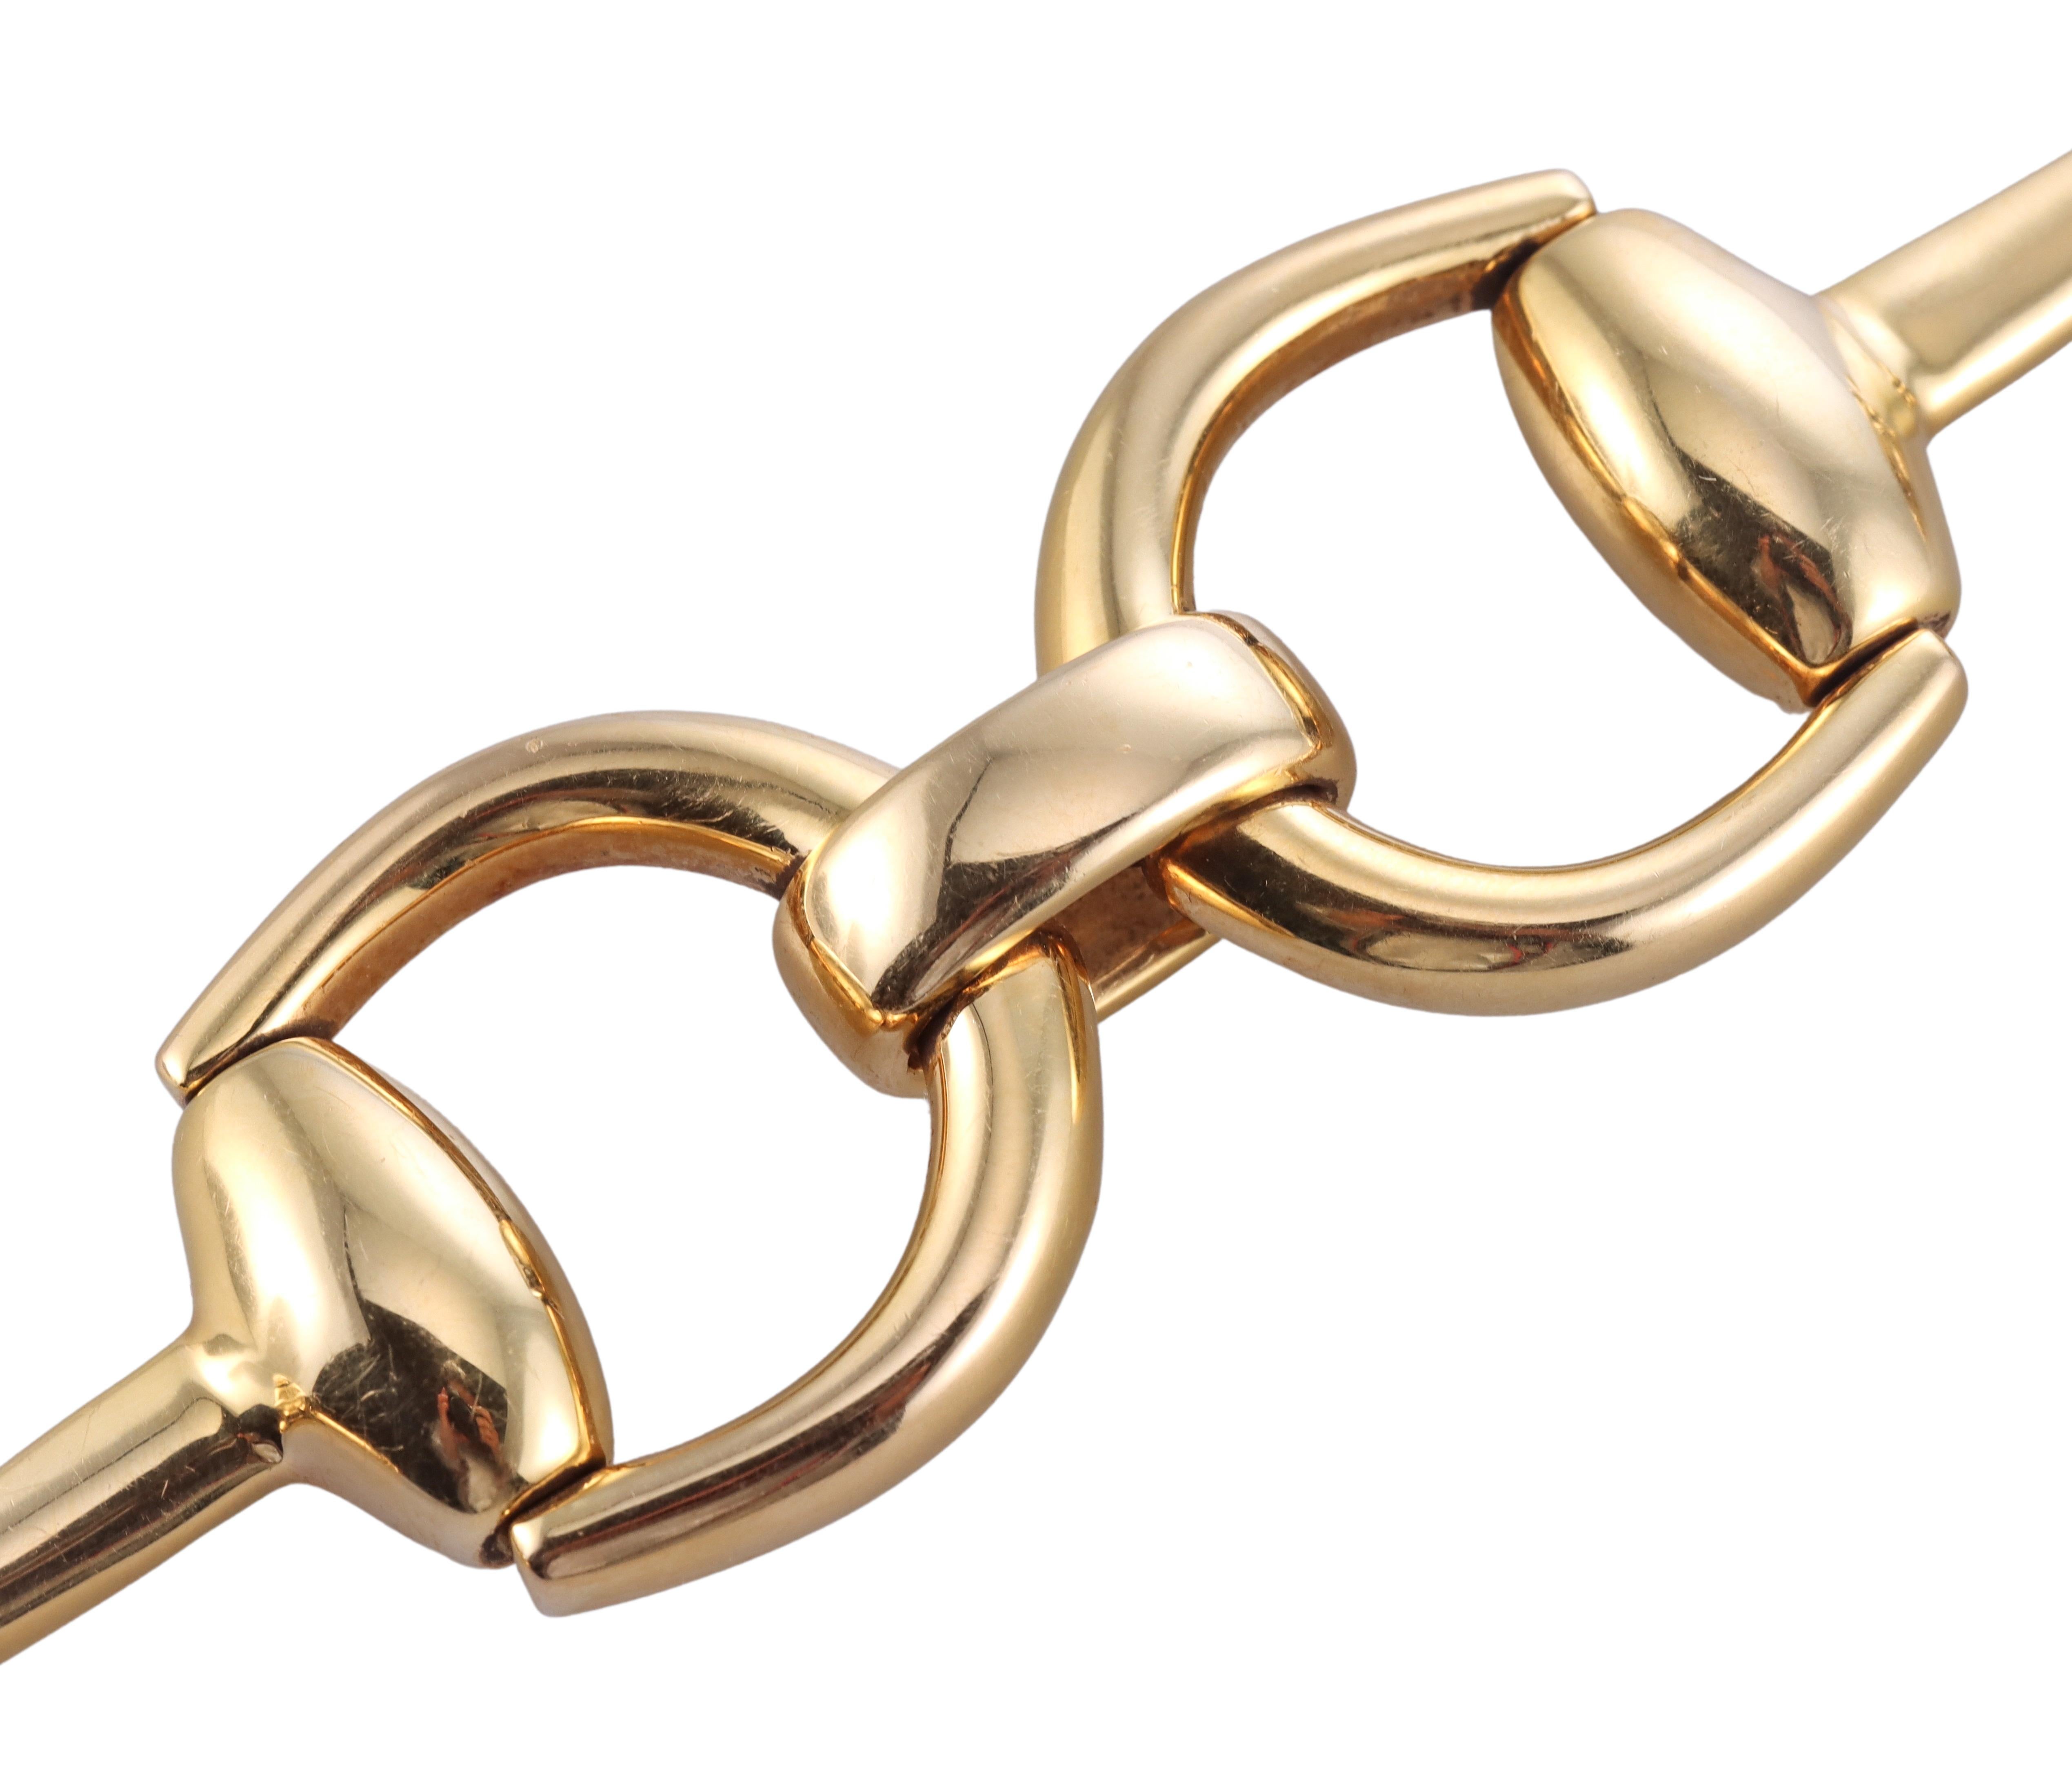 Classic horse bit bracelet by Gucci, in 18k yellow gold. Bracelet measures 8